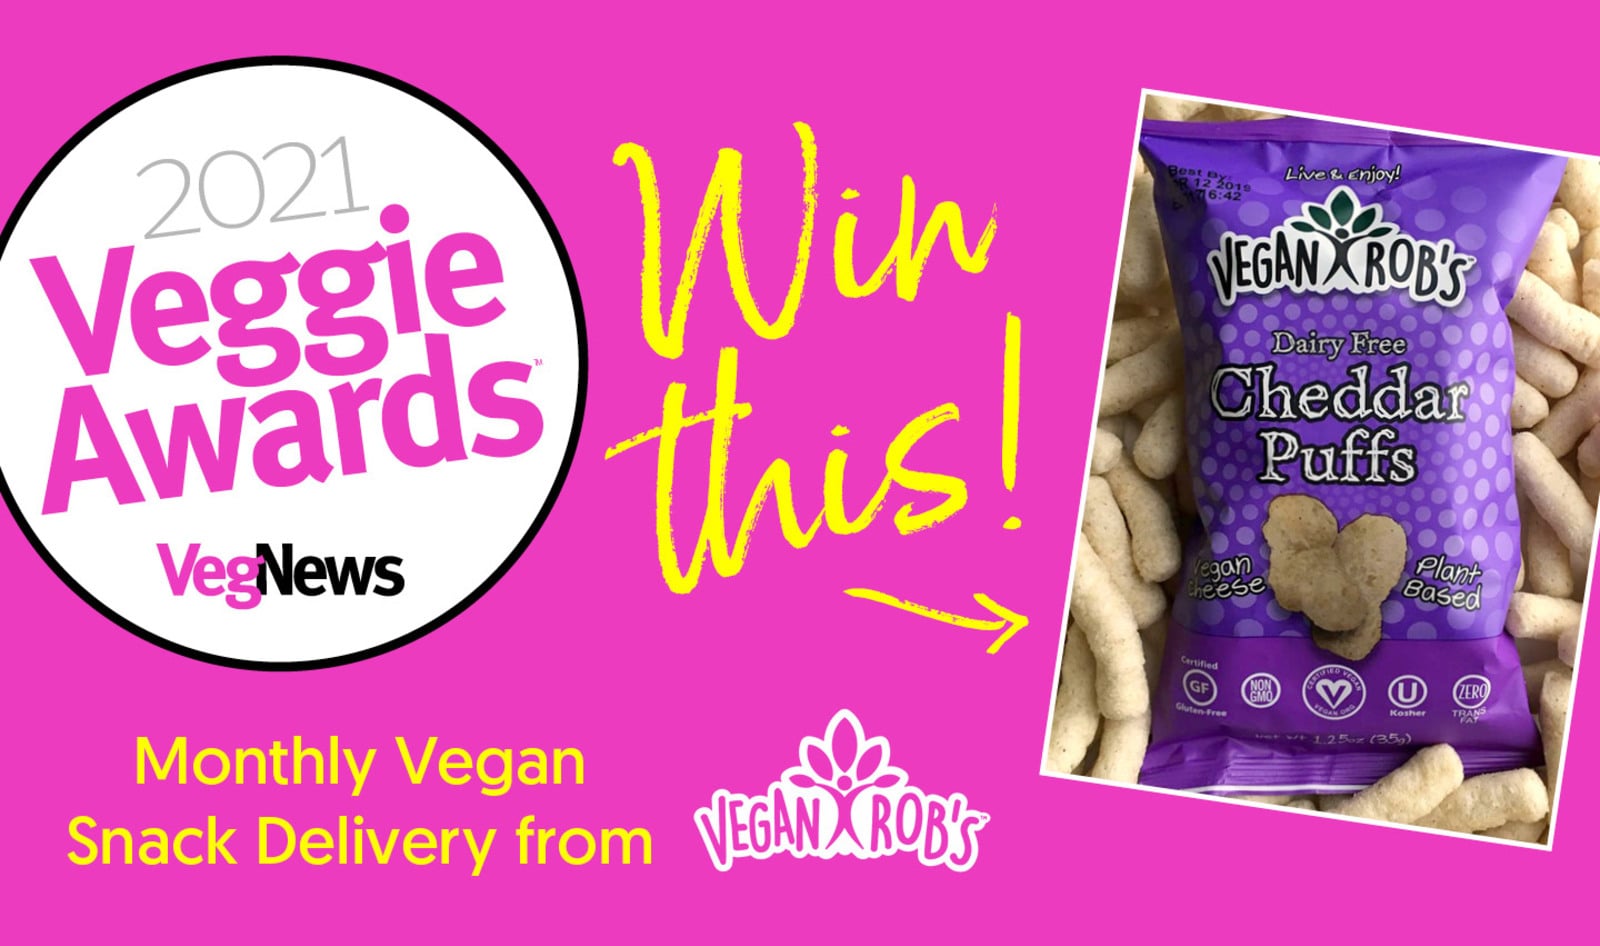 VeggieAwards2021.Prizes.VeganRobs.1440x852